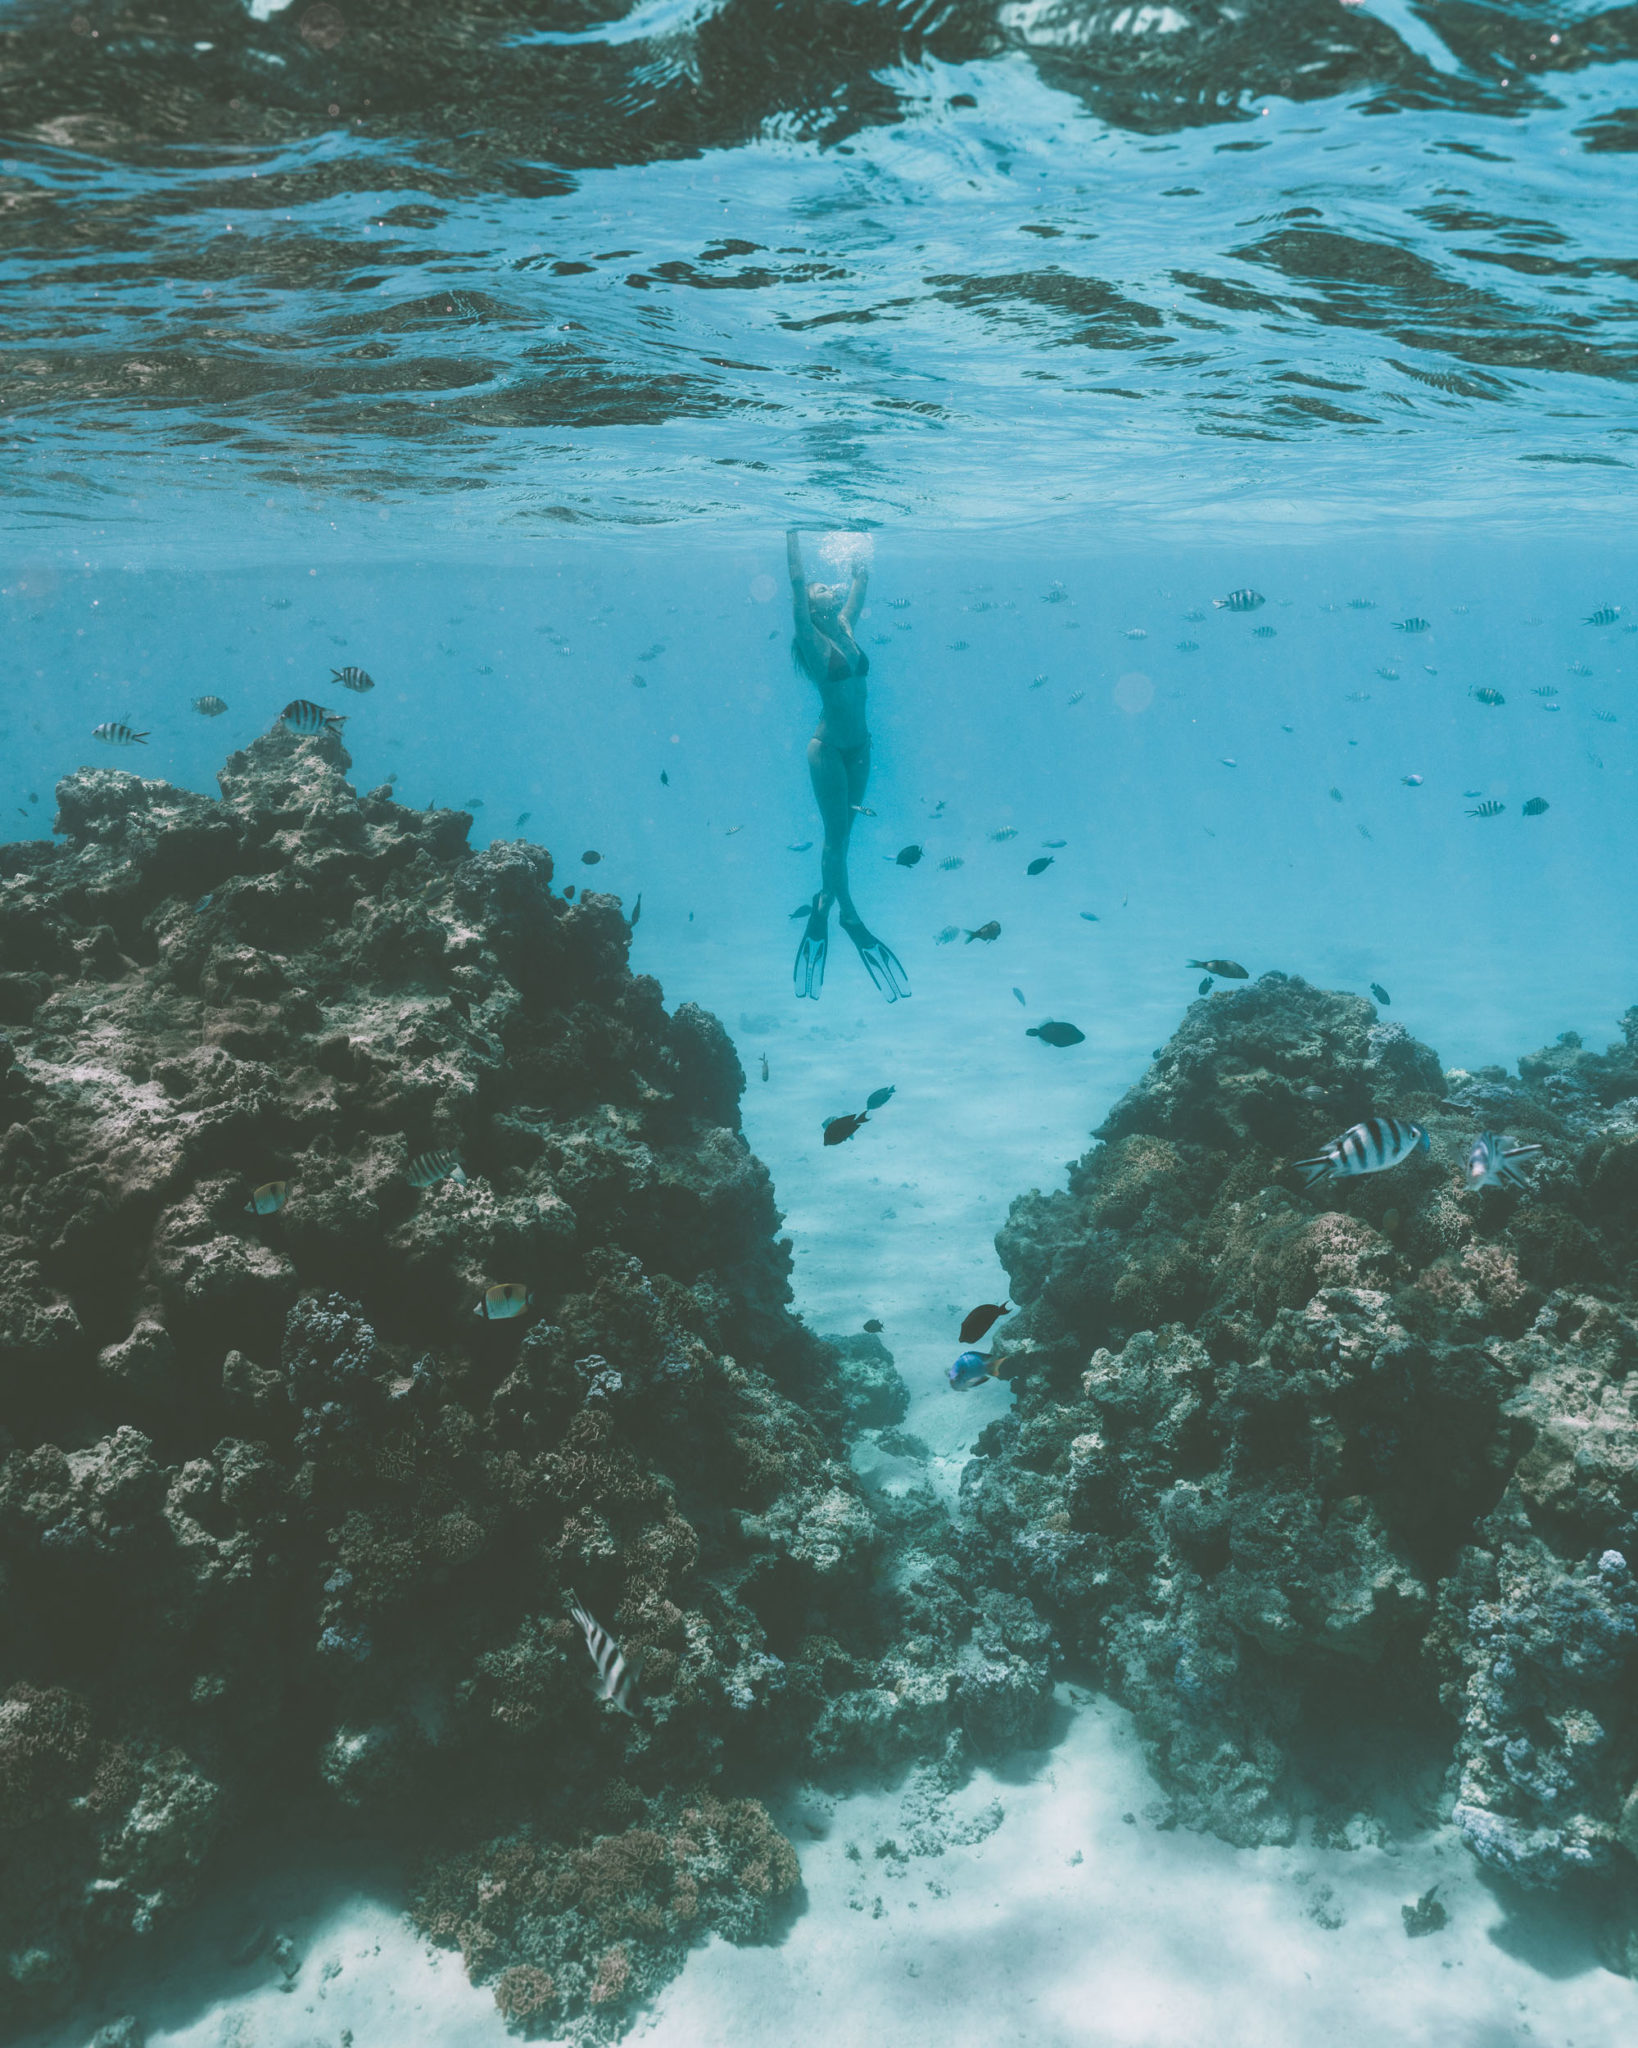 Underwater coral reefs at Four Seasons Bora Bora in Tahiti for our honeymoon via @finduslost